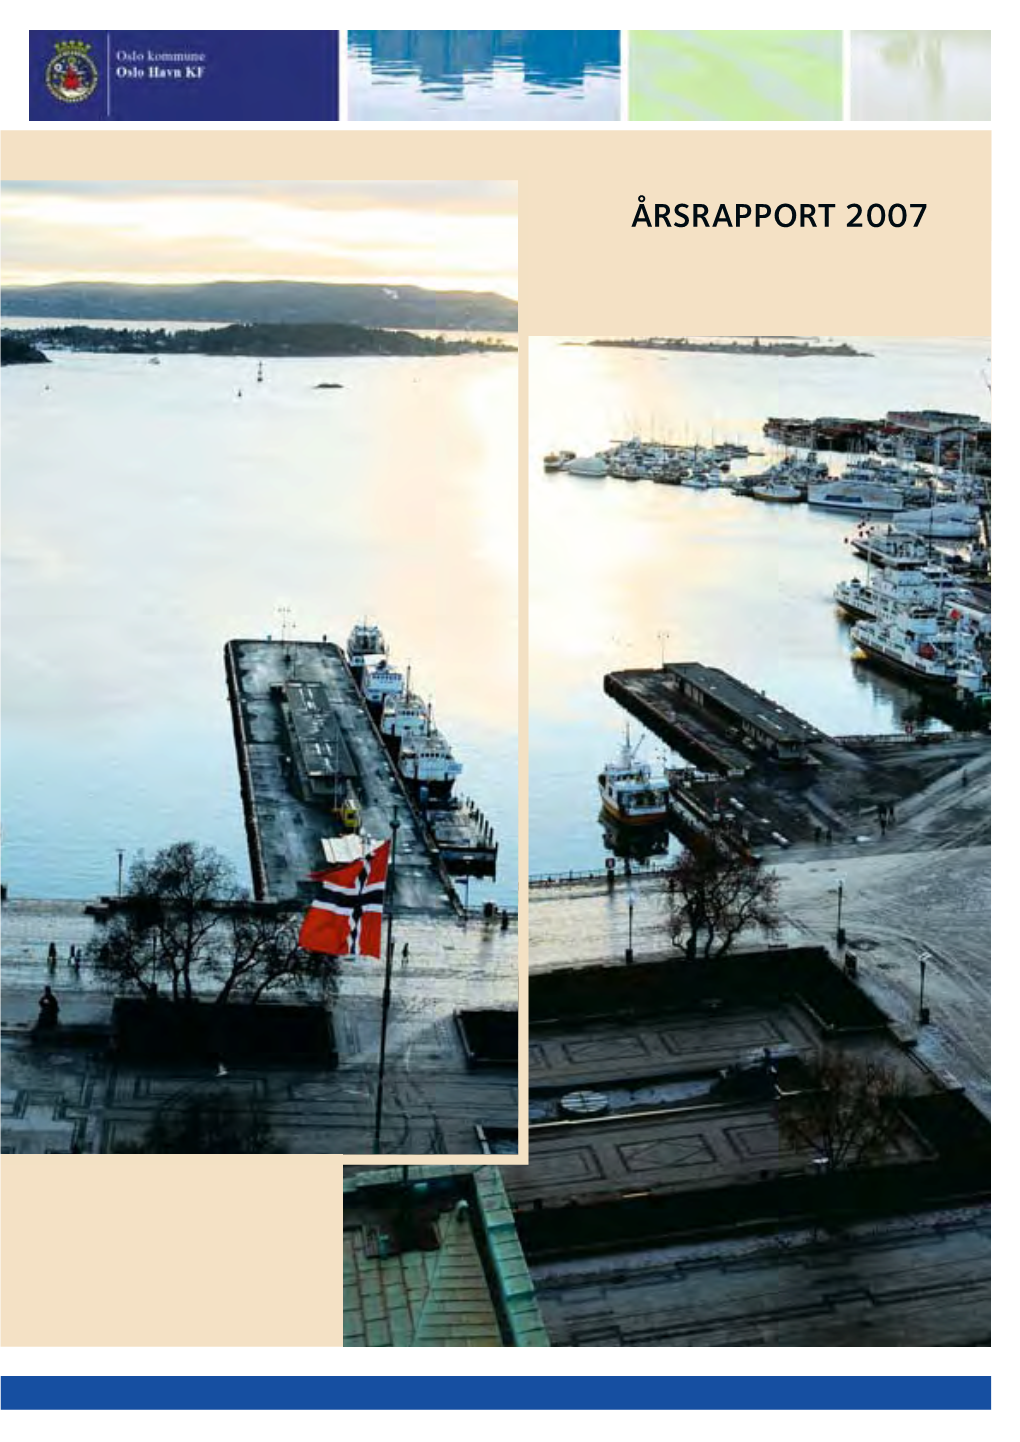 ÅRSRAPPORT 2007 Dette Er Oslo Havn KF 3